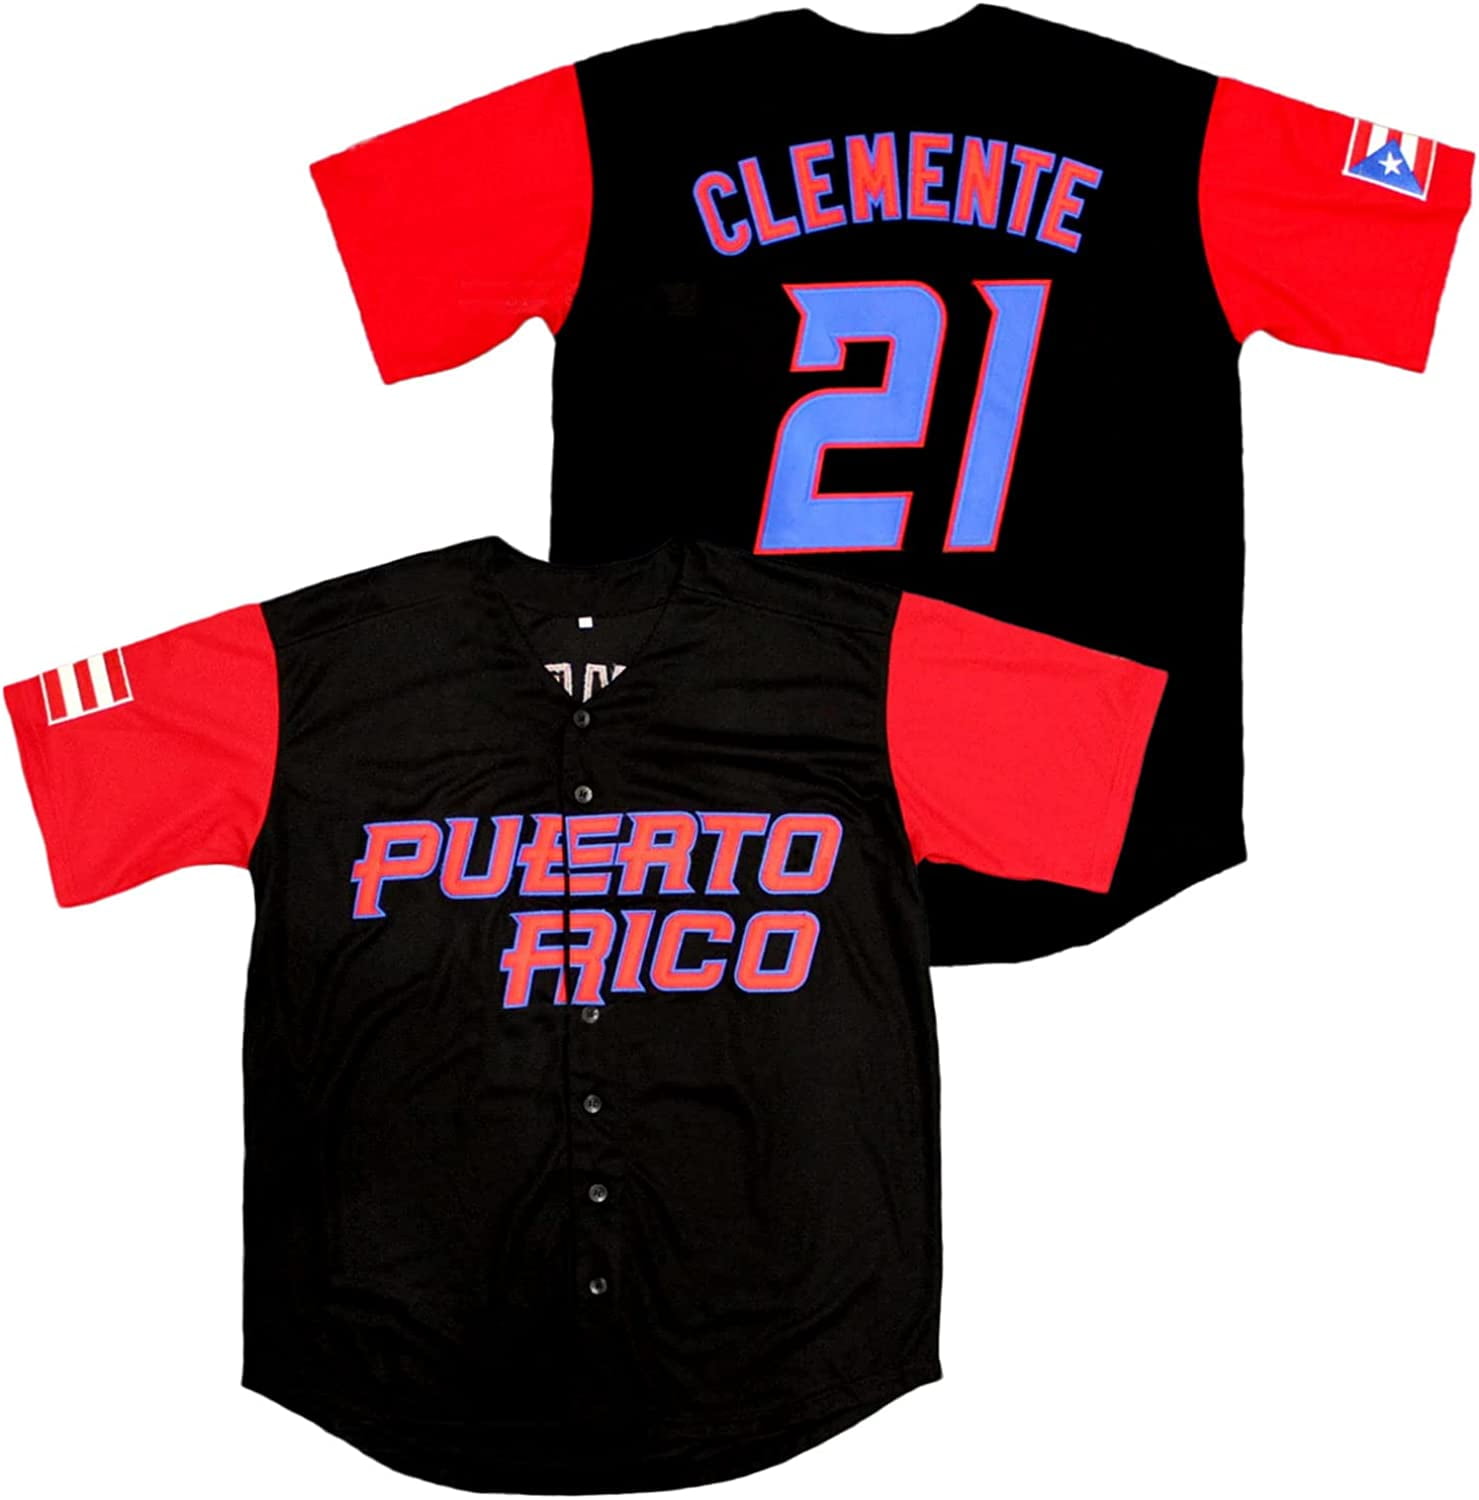 #9 Baez Puerto Rico World Game Classic Men Baseball Jersey Stitched S-XXXL